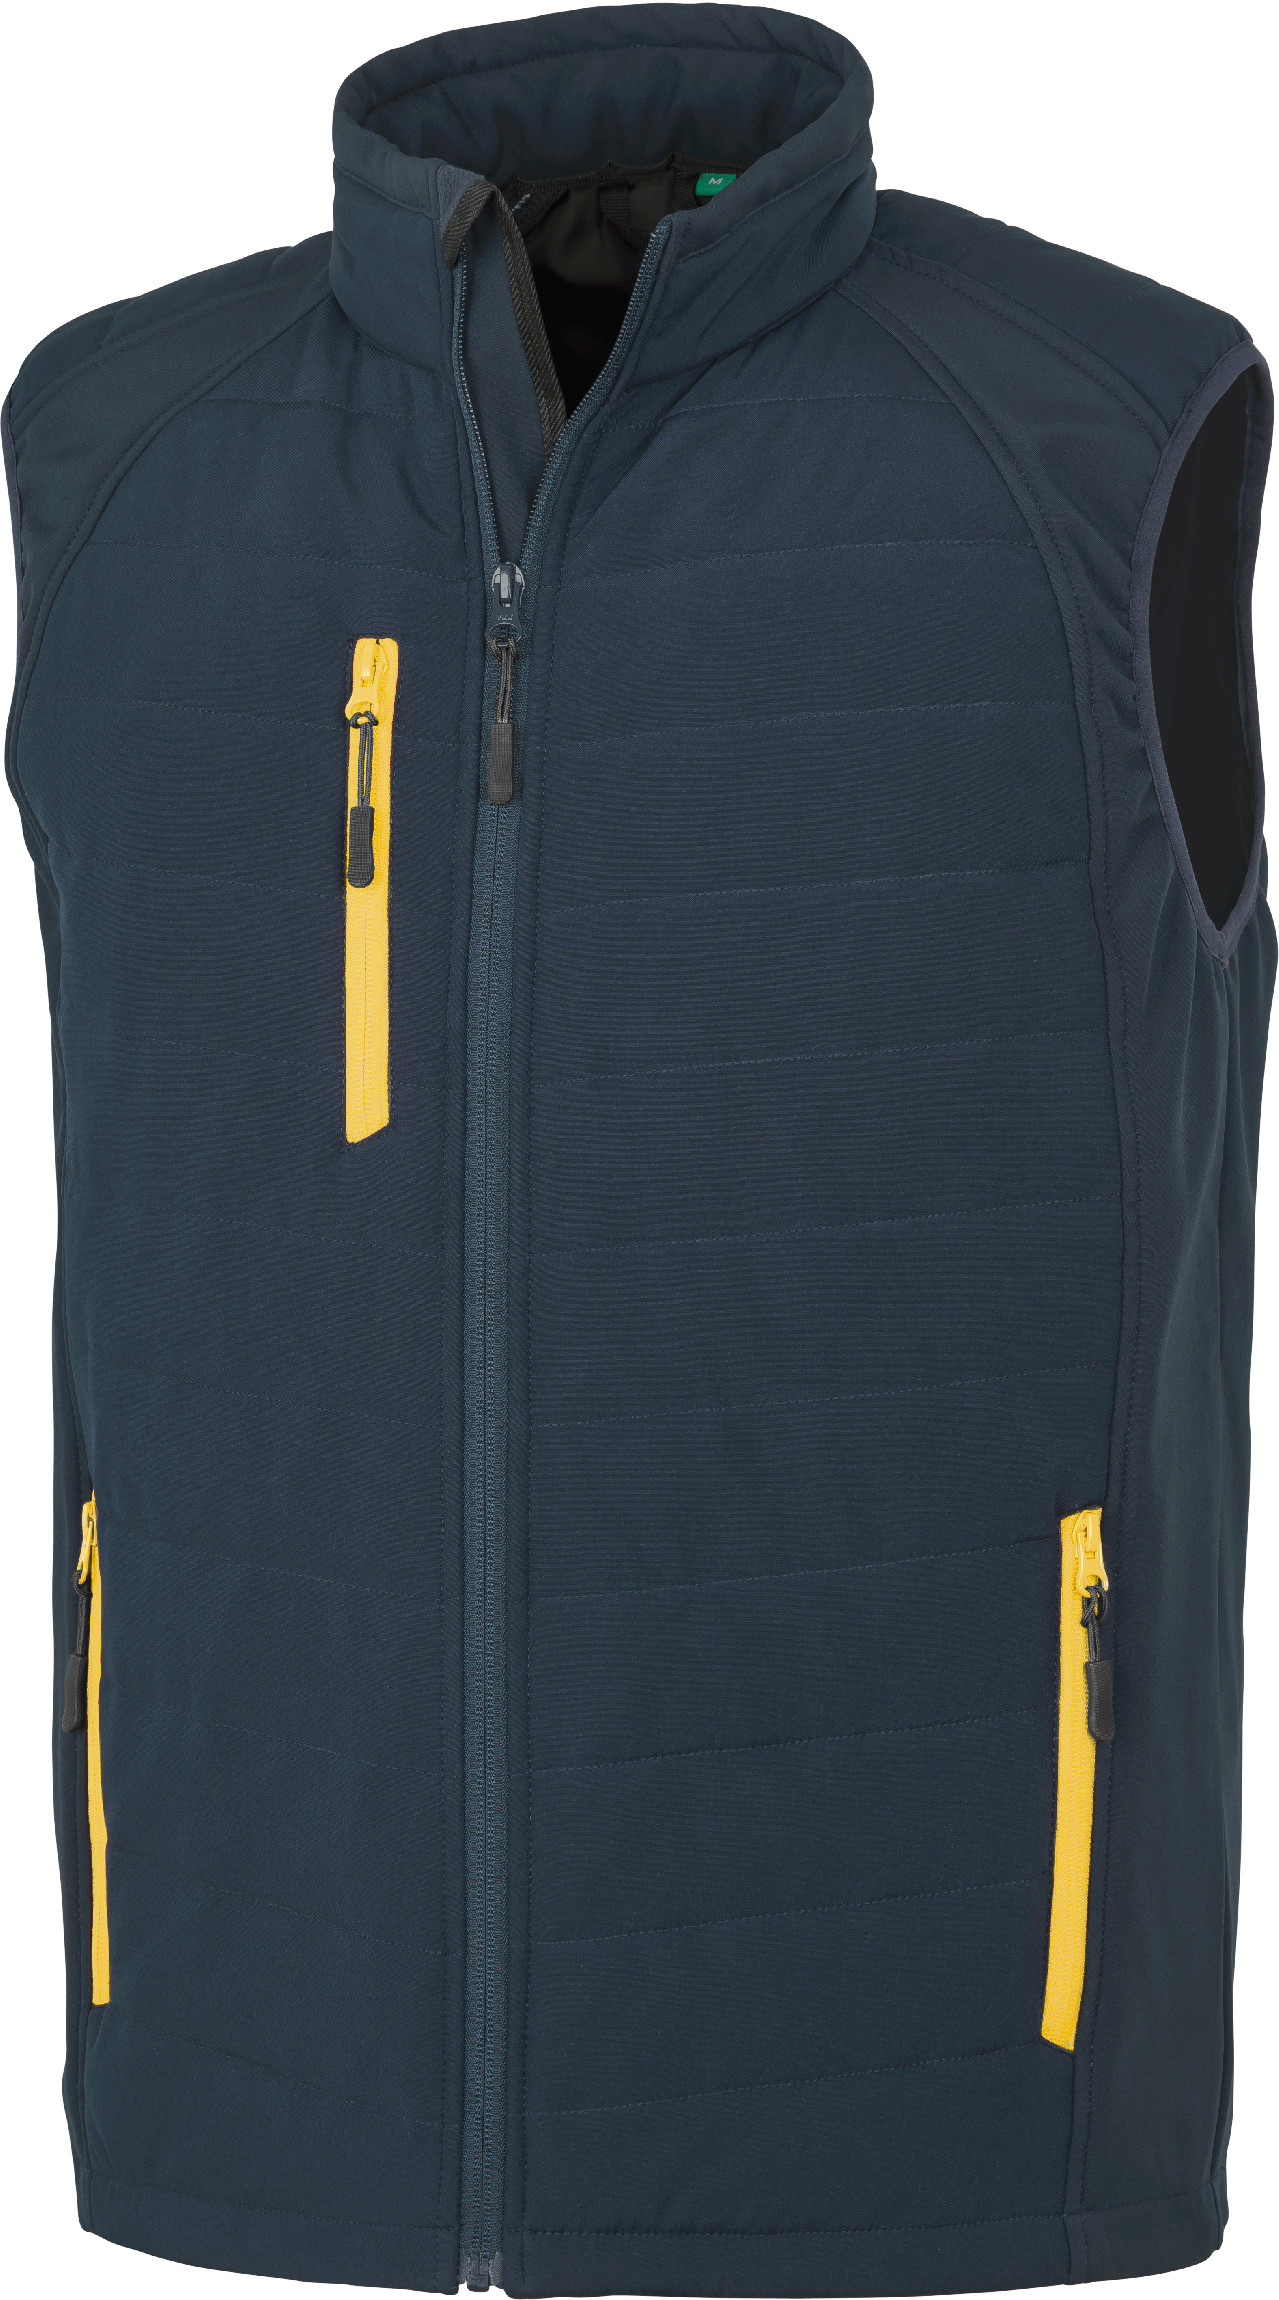 Polstrovaná softshell vesta Compass R238X Barva: námořní modrá-žlutá, Velikost: XL